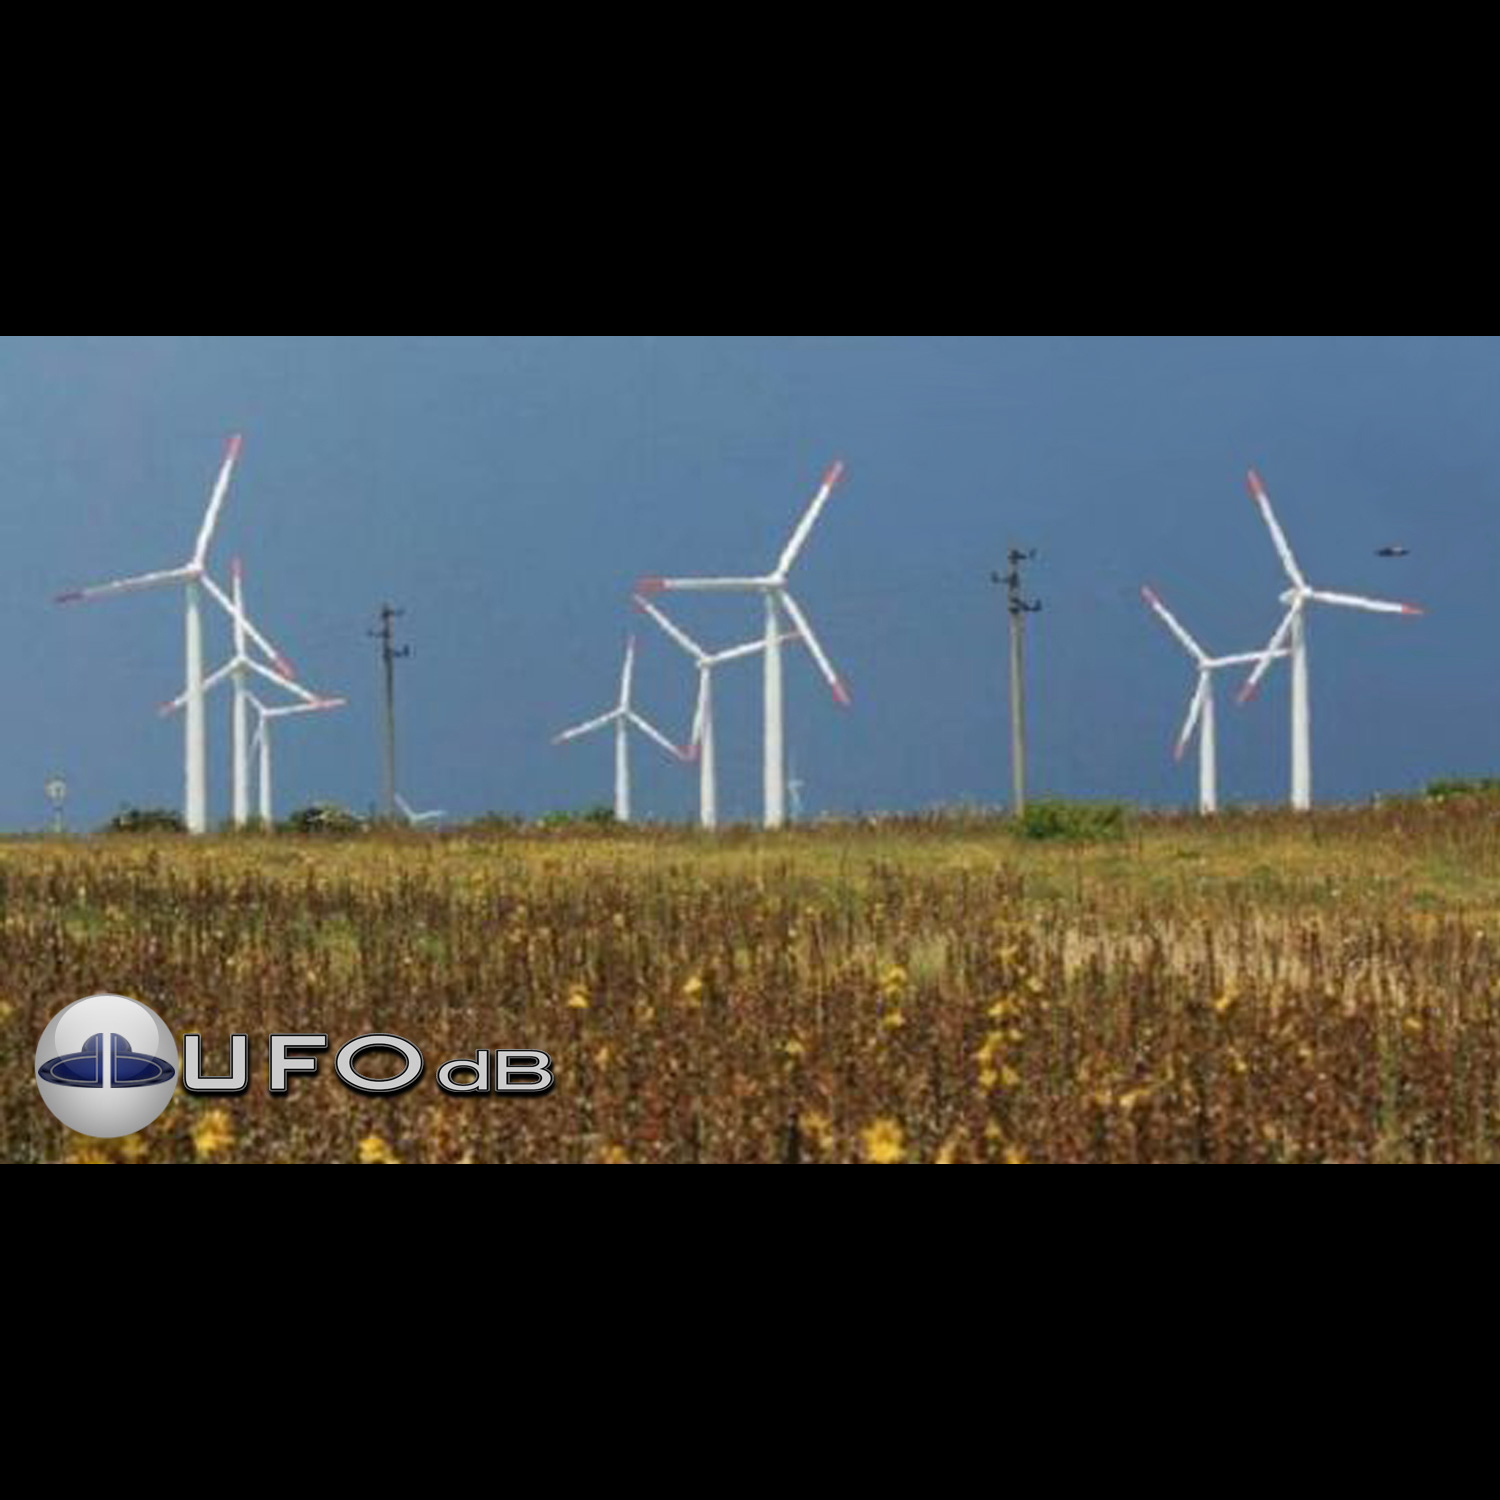 UFO near power lines and Wind turbines | Bulgaria Black Sea Coast 2005 UFO Picture #210-1